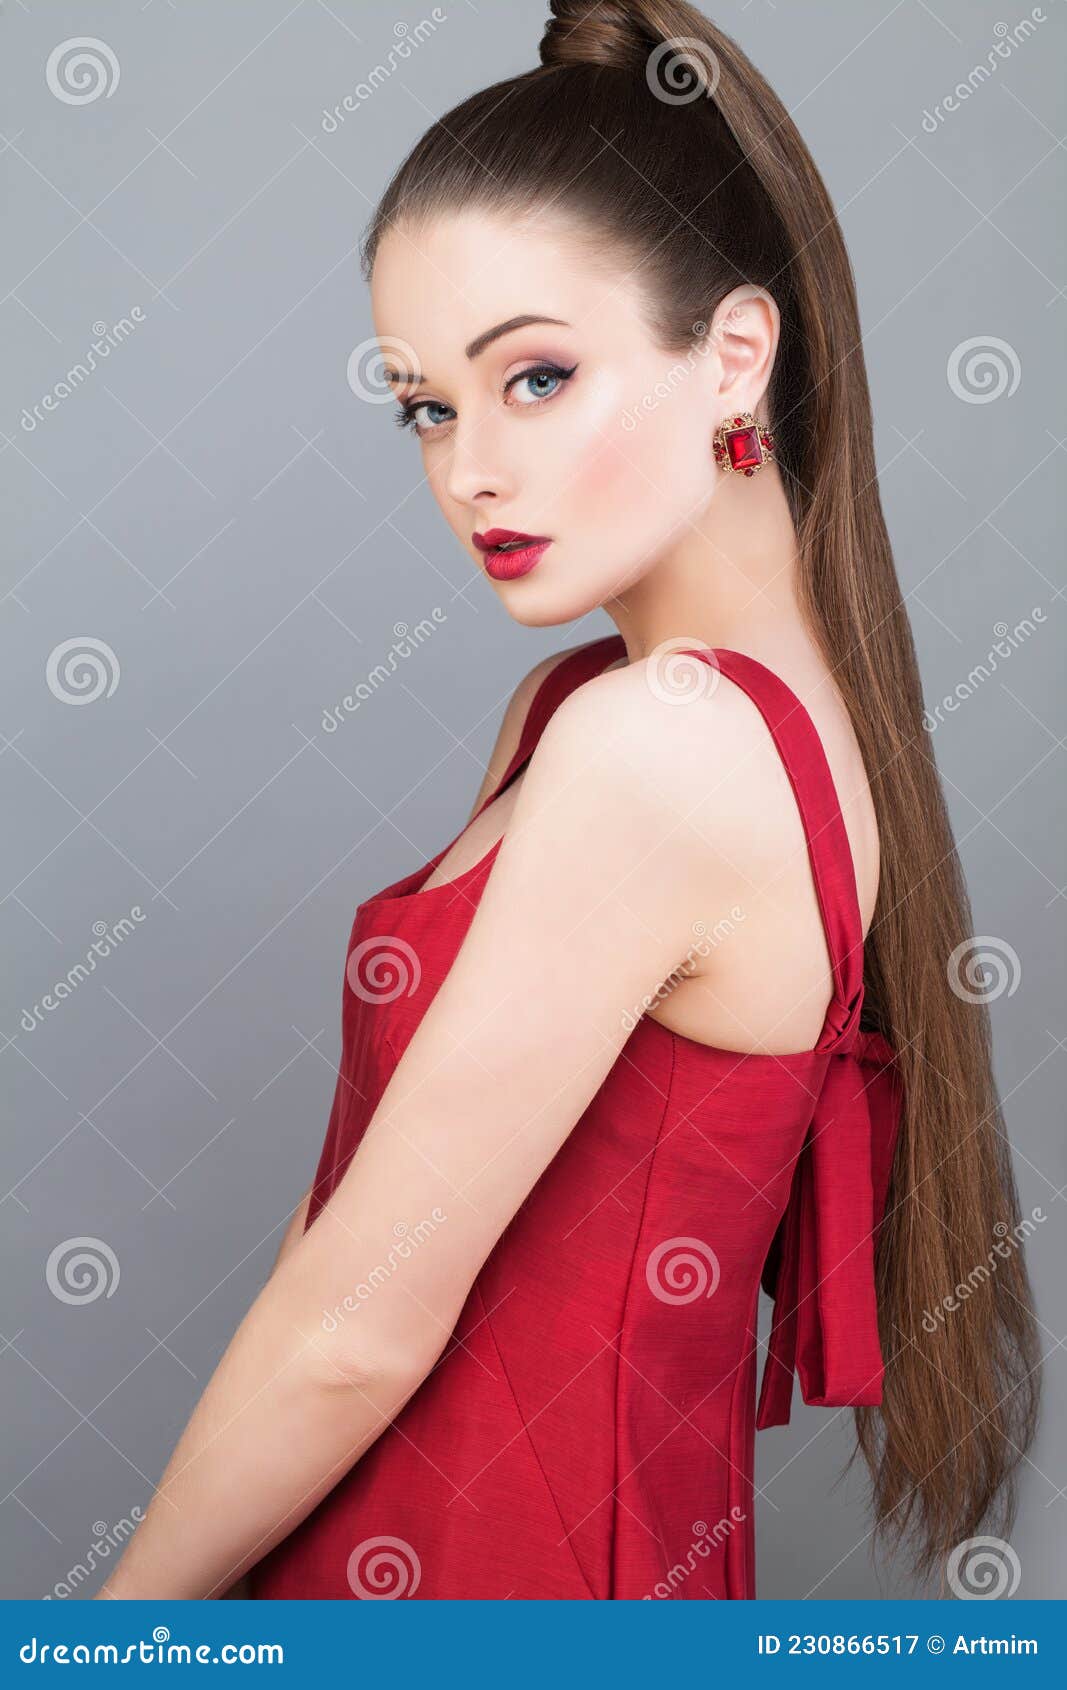 Hermosa Modelo De Moda De Glamorosa Con Peinado Cola Poni Vestido Y Anillo Dorado de archivo - Imagen de dorado, haircut: 230866517